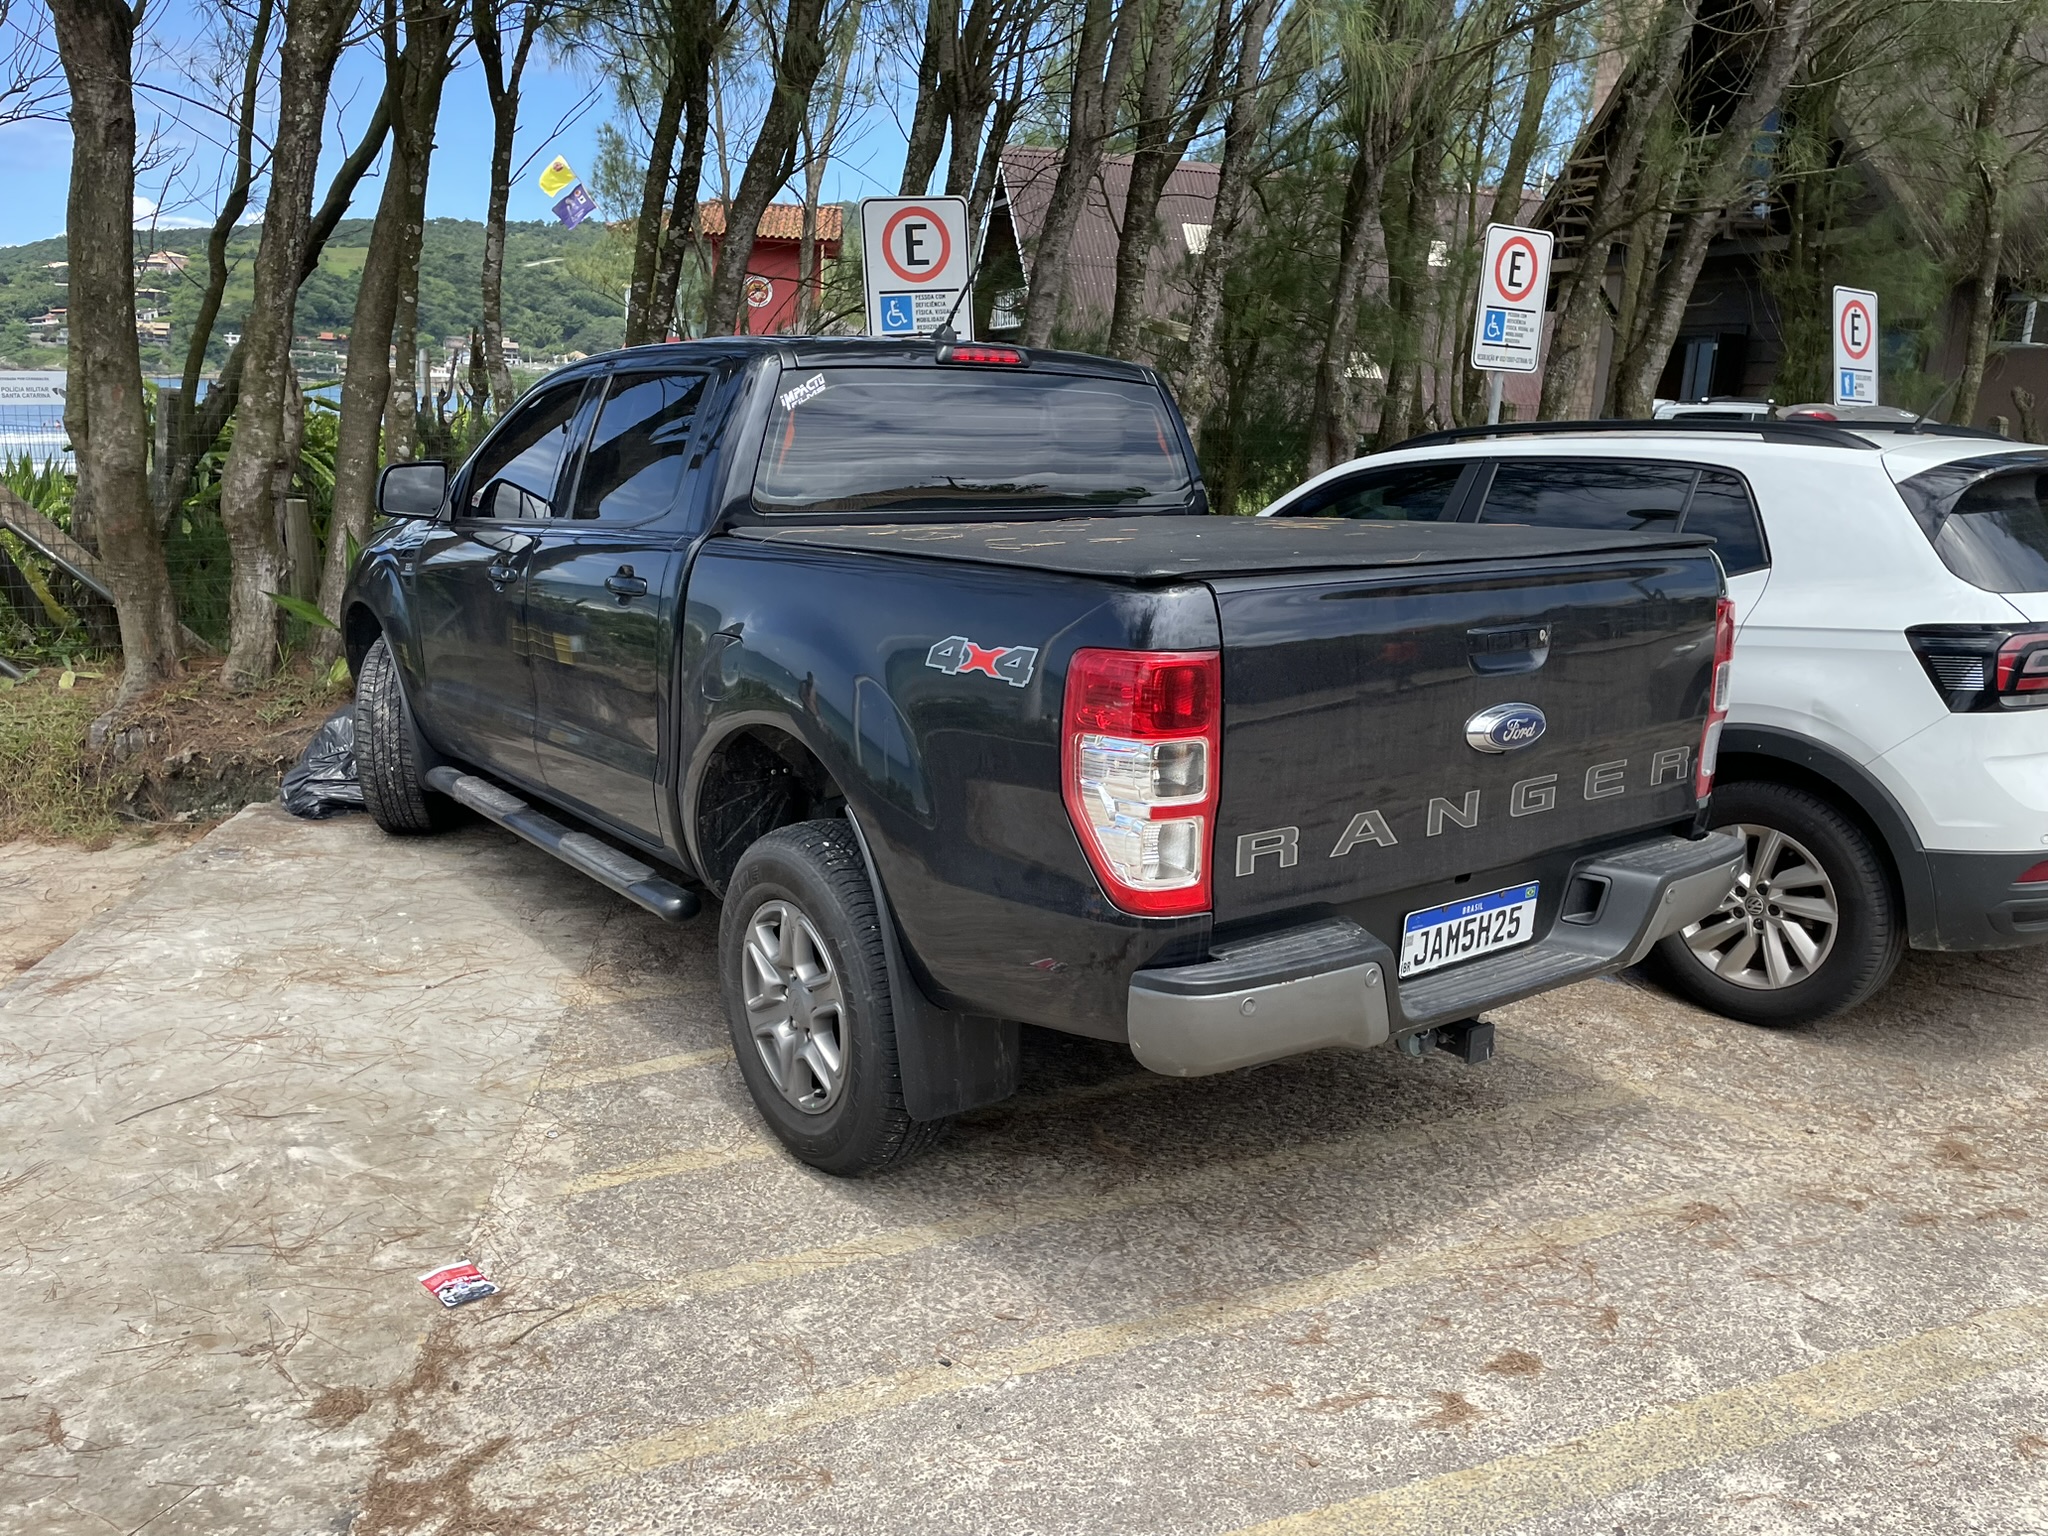 Ford Ranger Brazil trip - Gen 6 Ranger pics and other fun vehicles 1704892474163